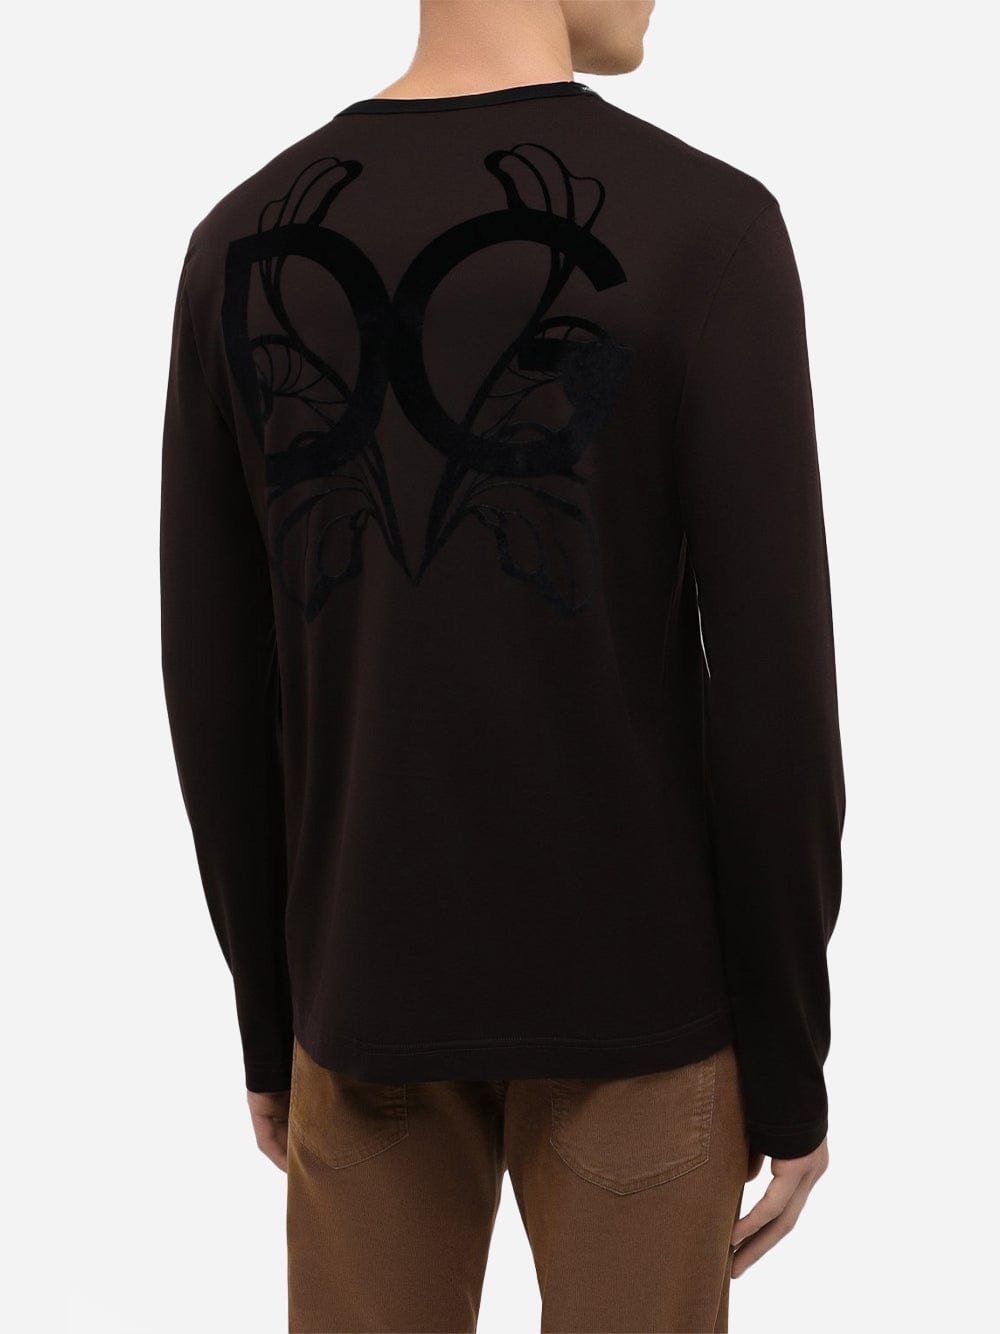 Dolce & Gabbana Flocked DG Logo Sweatshirt